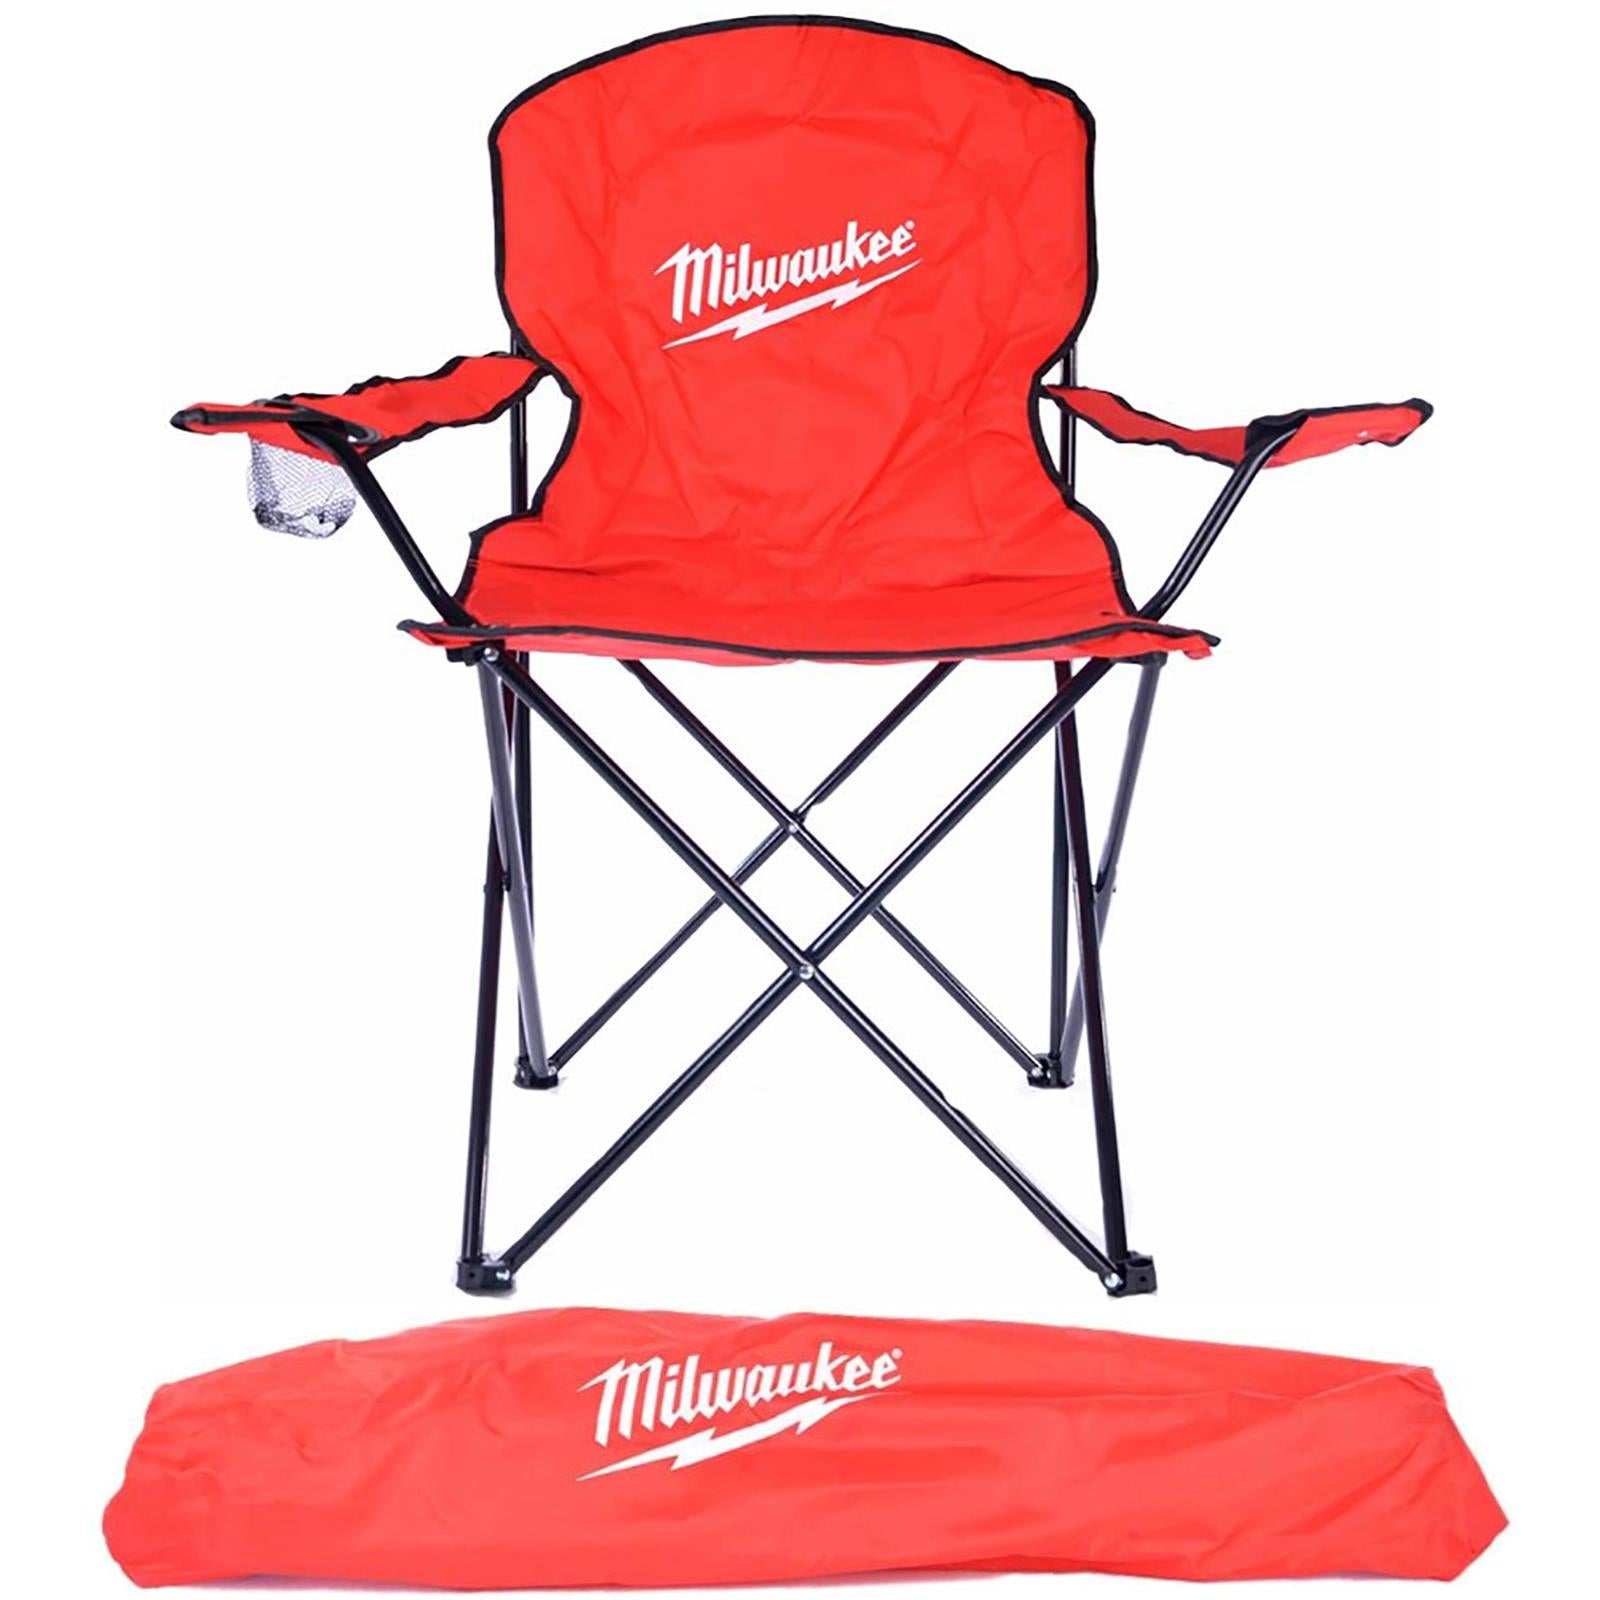 Miwaukee Camping Chair